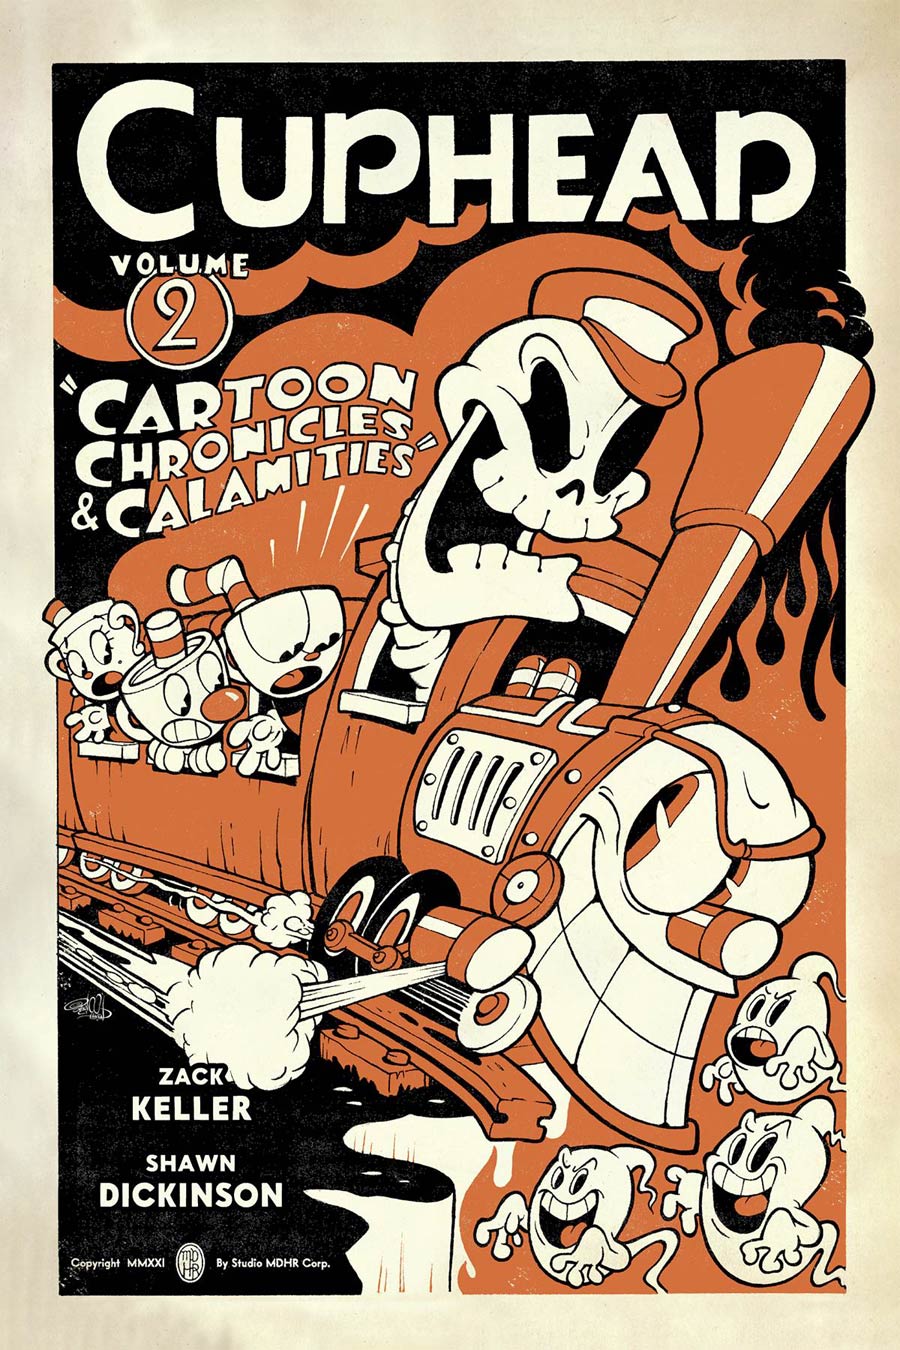 Cuphead Vol 2 Cartoon Chronicles & Calamities TP